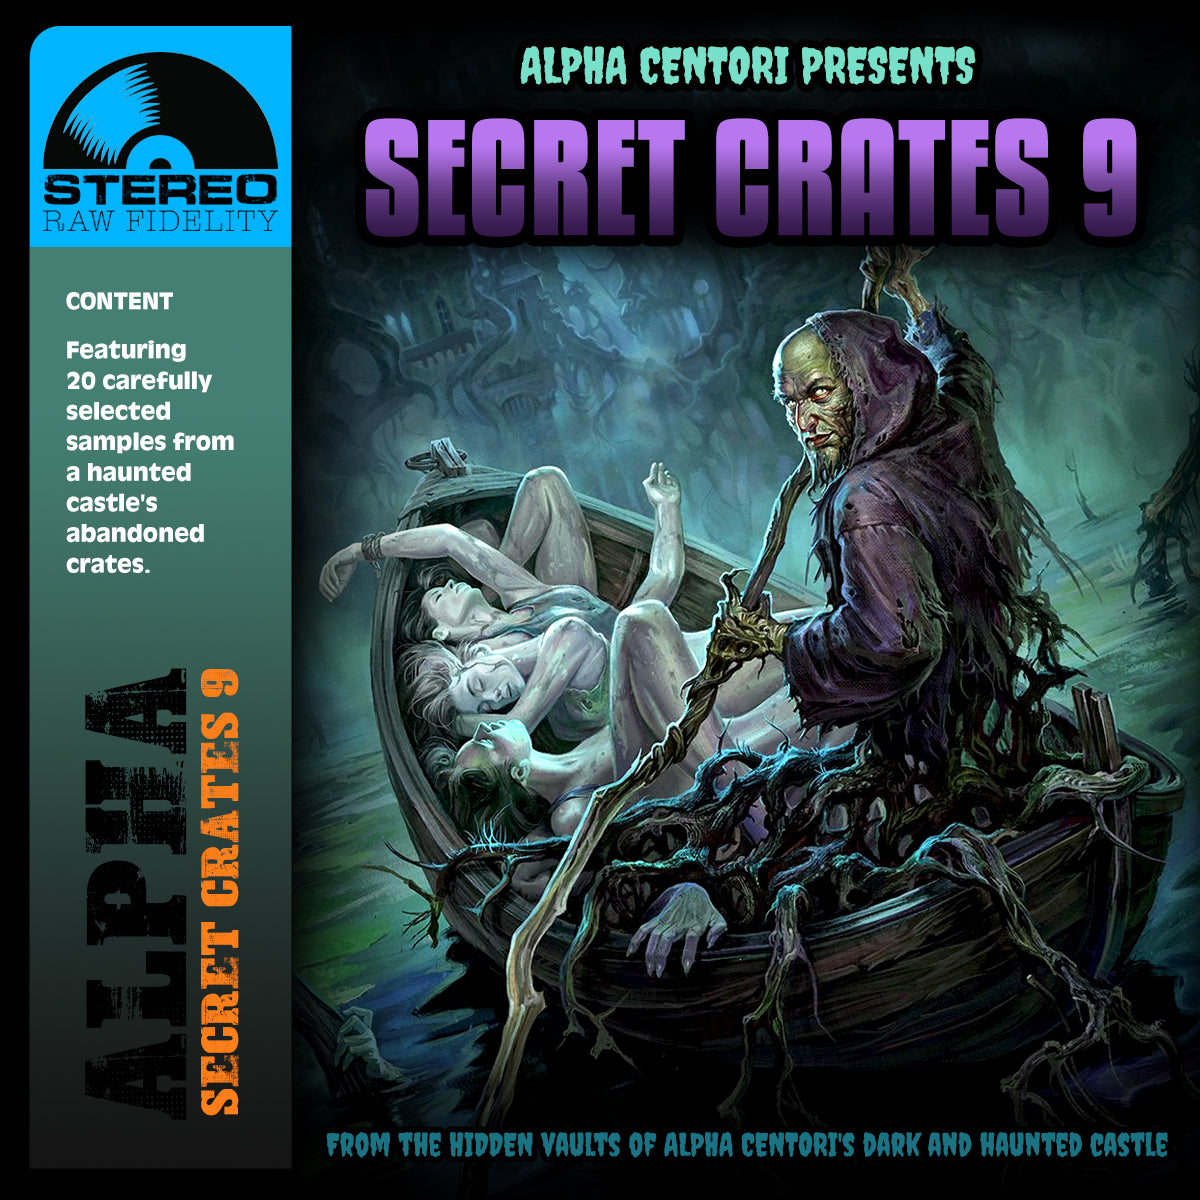 Secret Crates 9